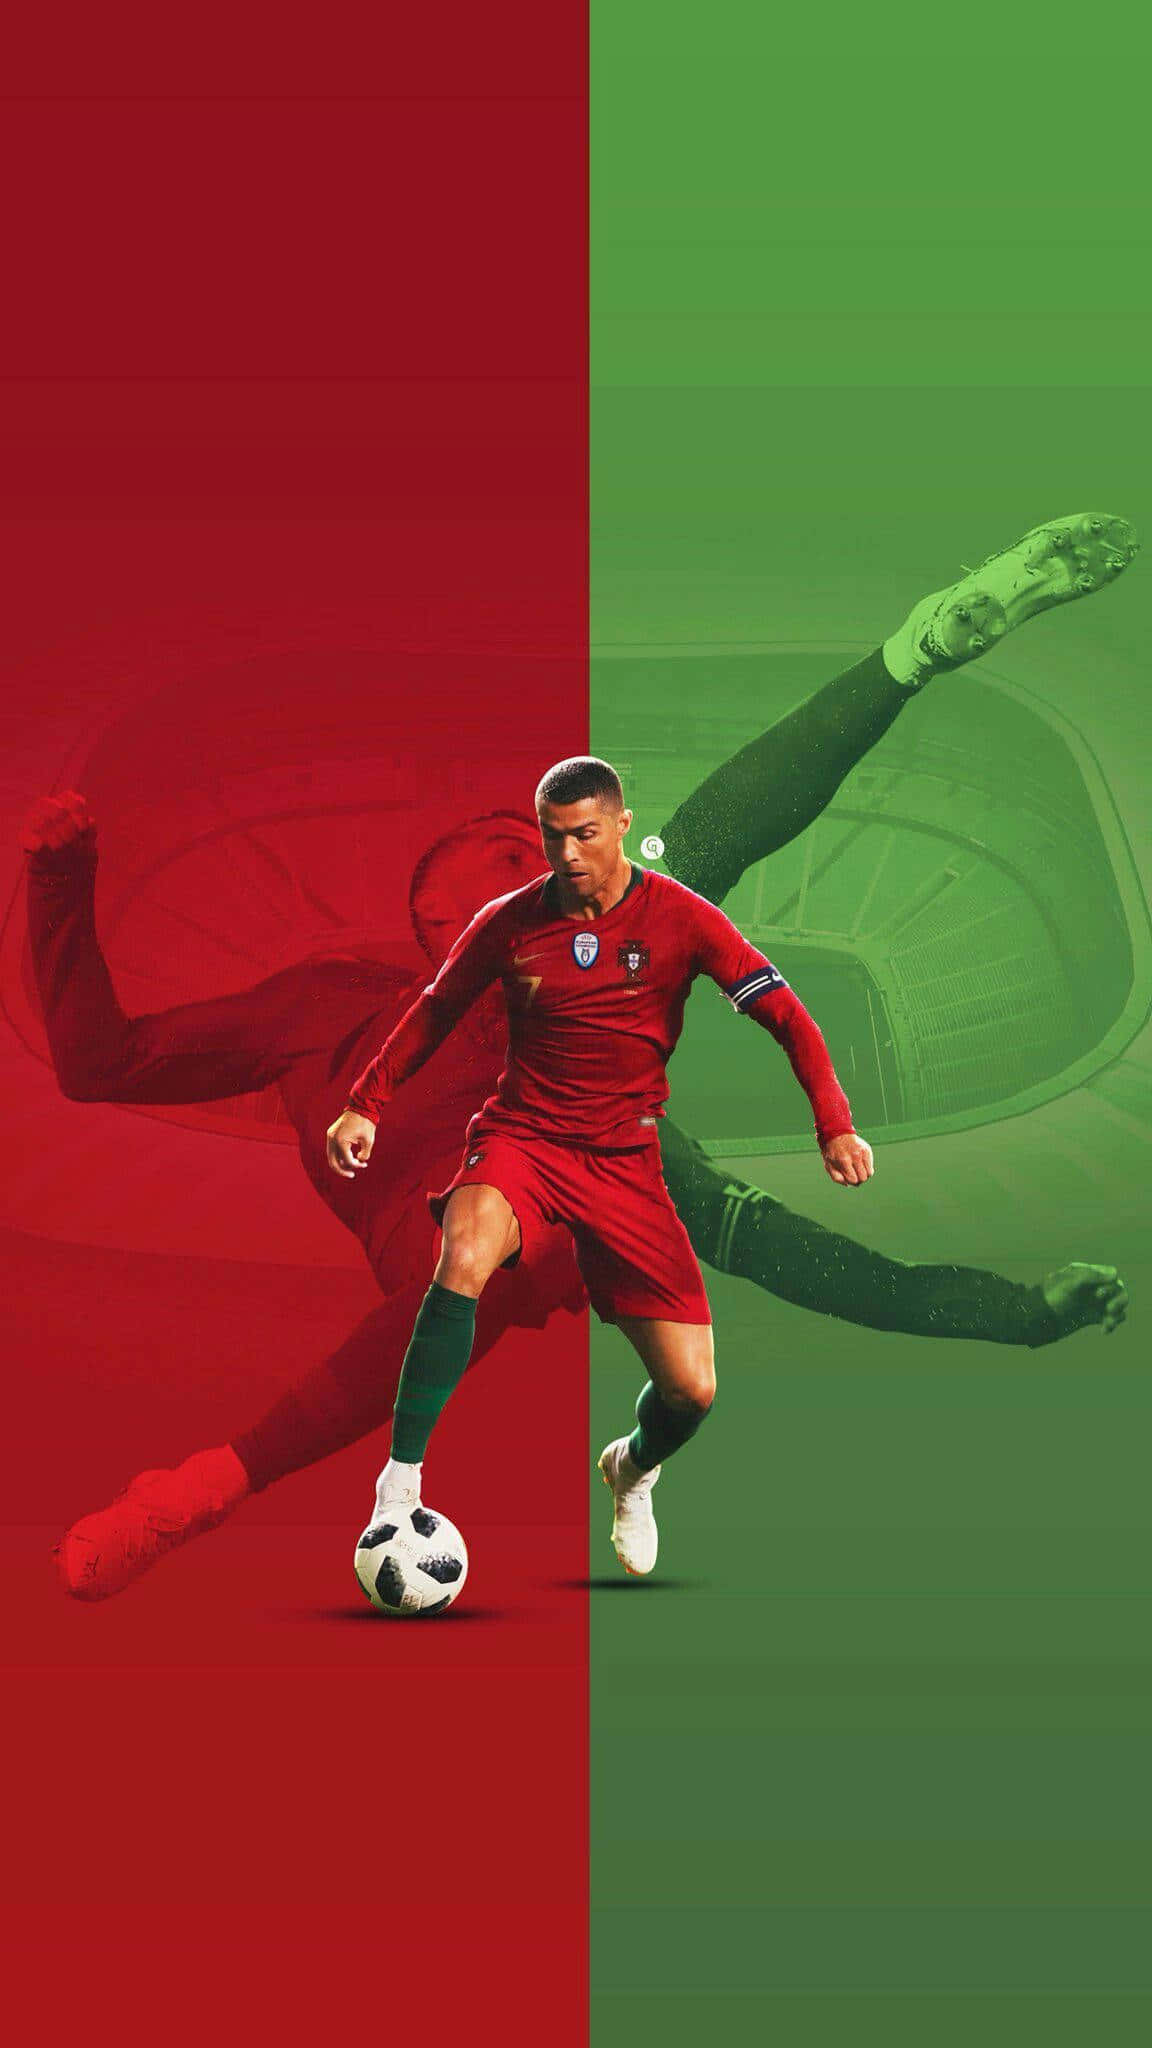 Cristiano Ronaldo in Action